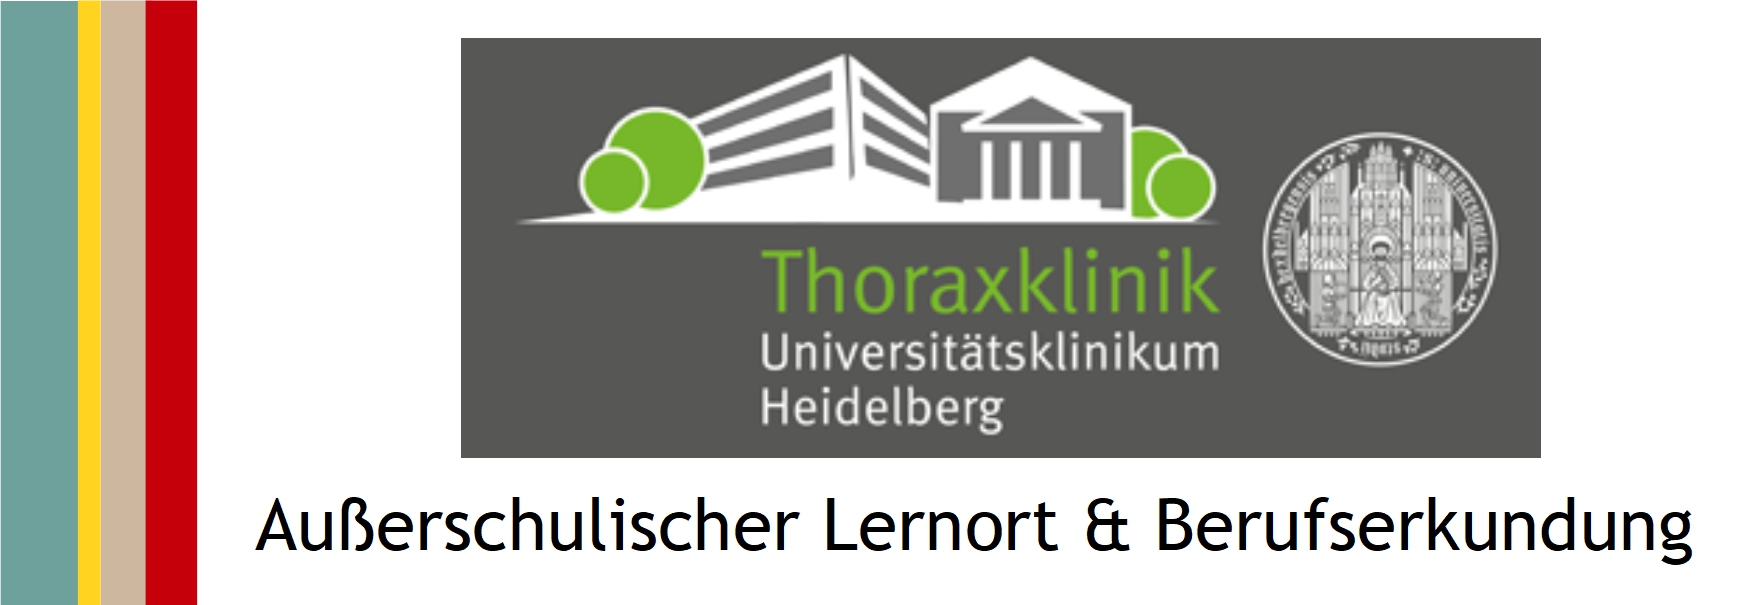 Logo der Thoraxklinik Heidelberg